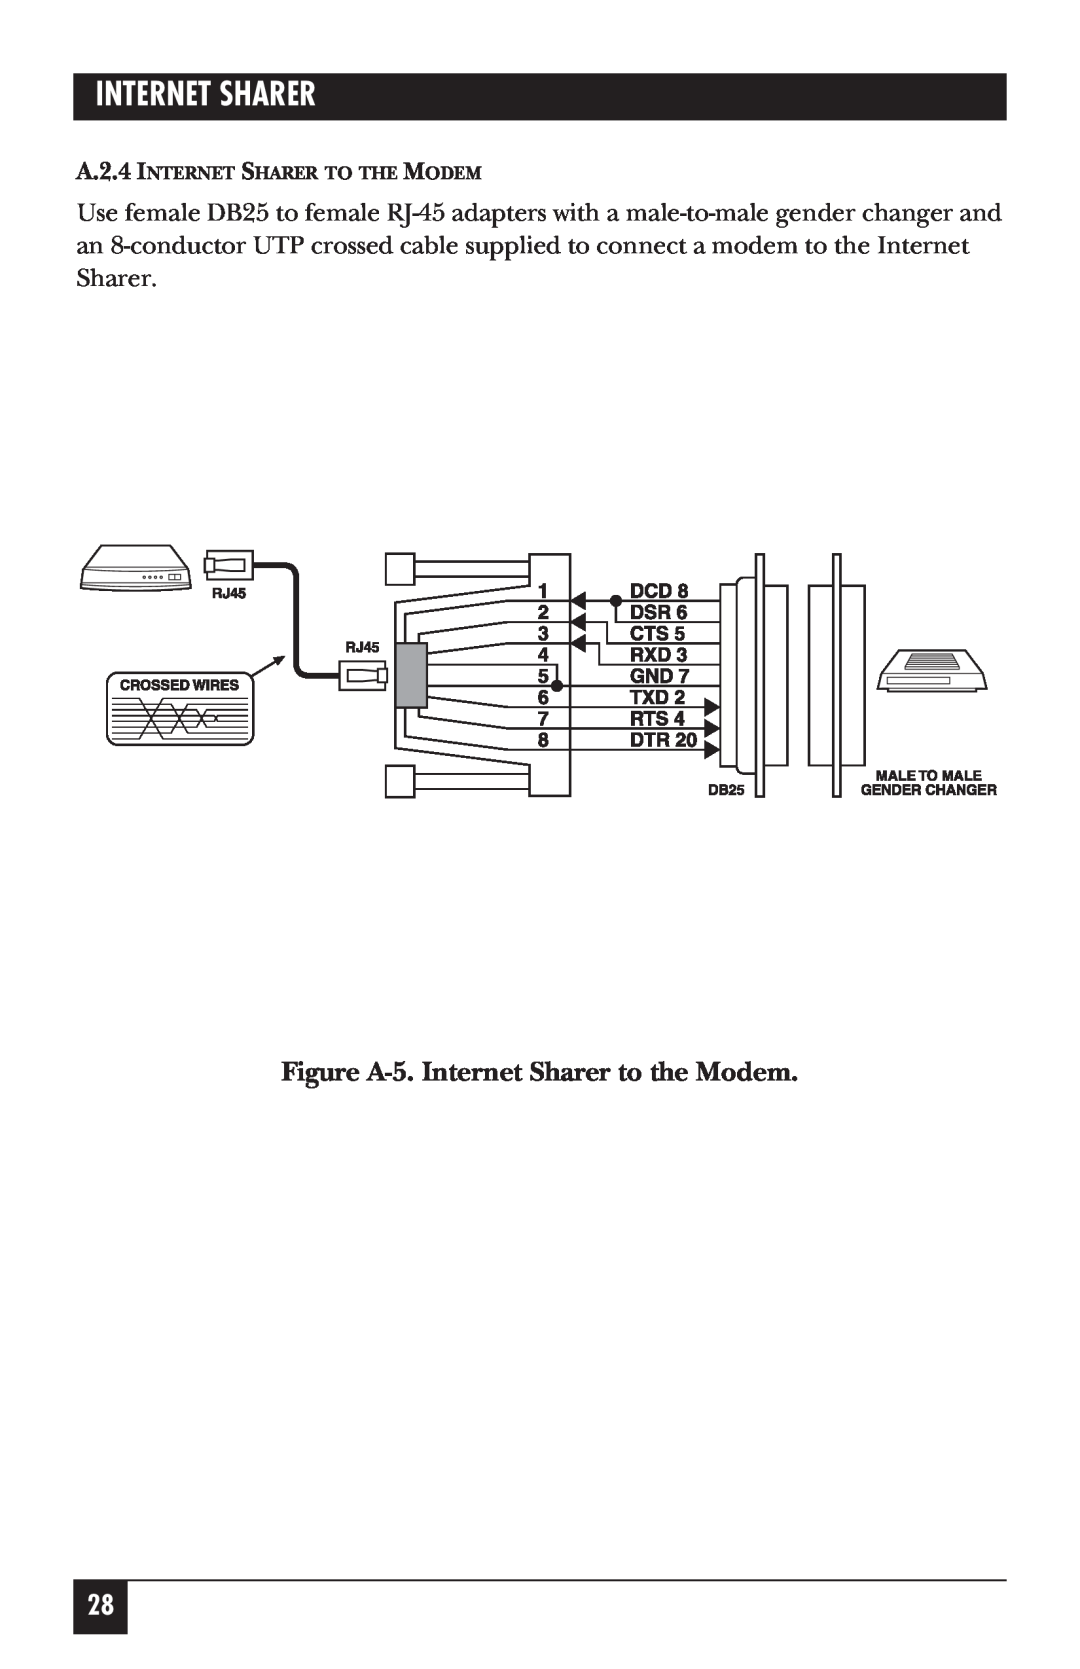 Black Box FX850AE manual Figure A-5. Internet Sharer to the Modem, A.2.4 INTERNET SHARER TO THE MODEM 